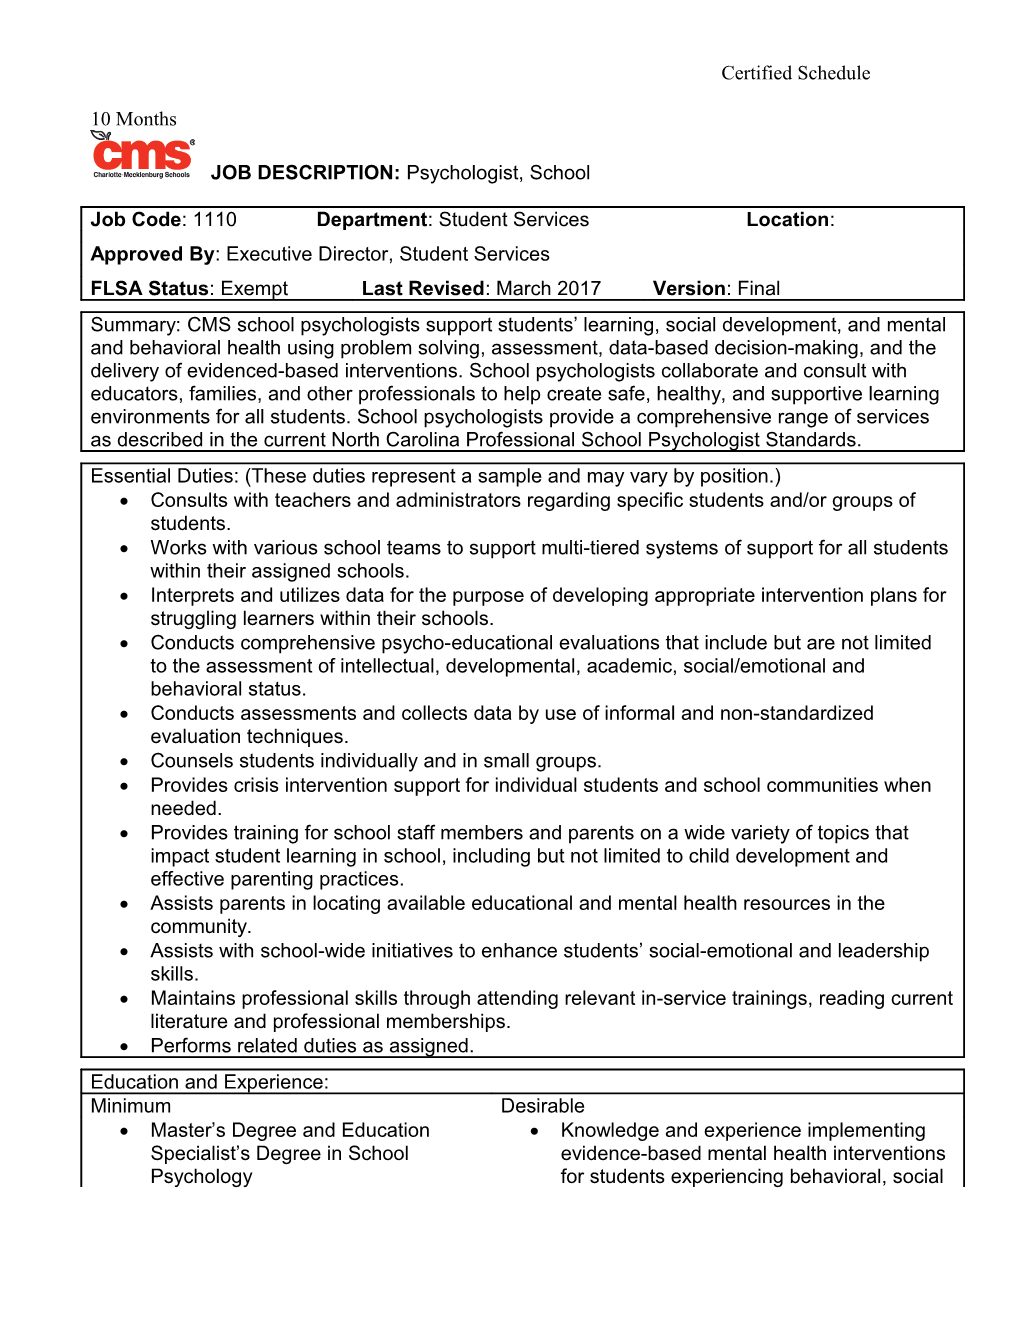 CMS School Psychology Job Description